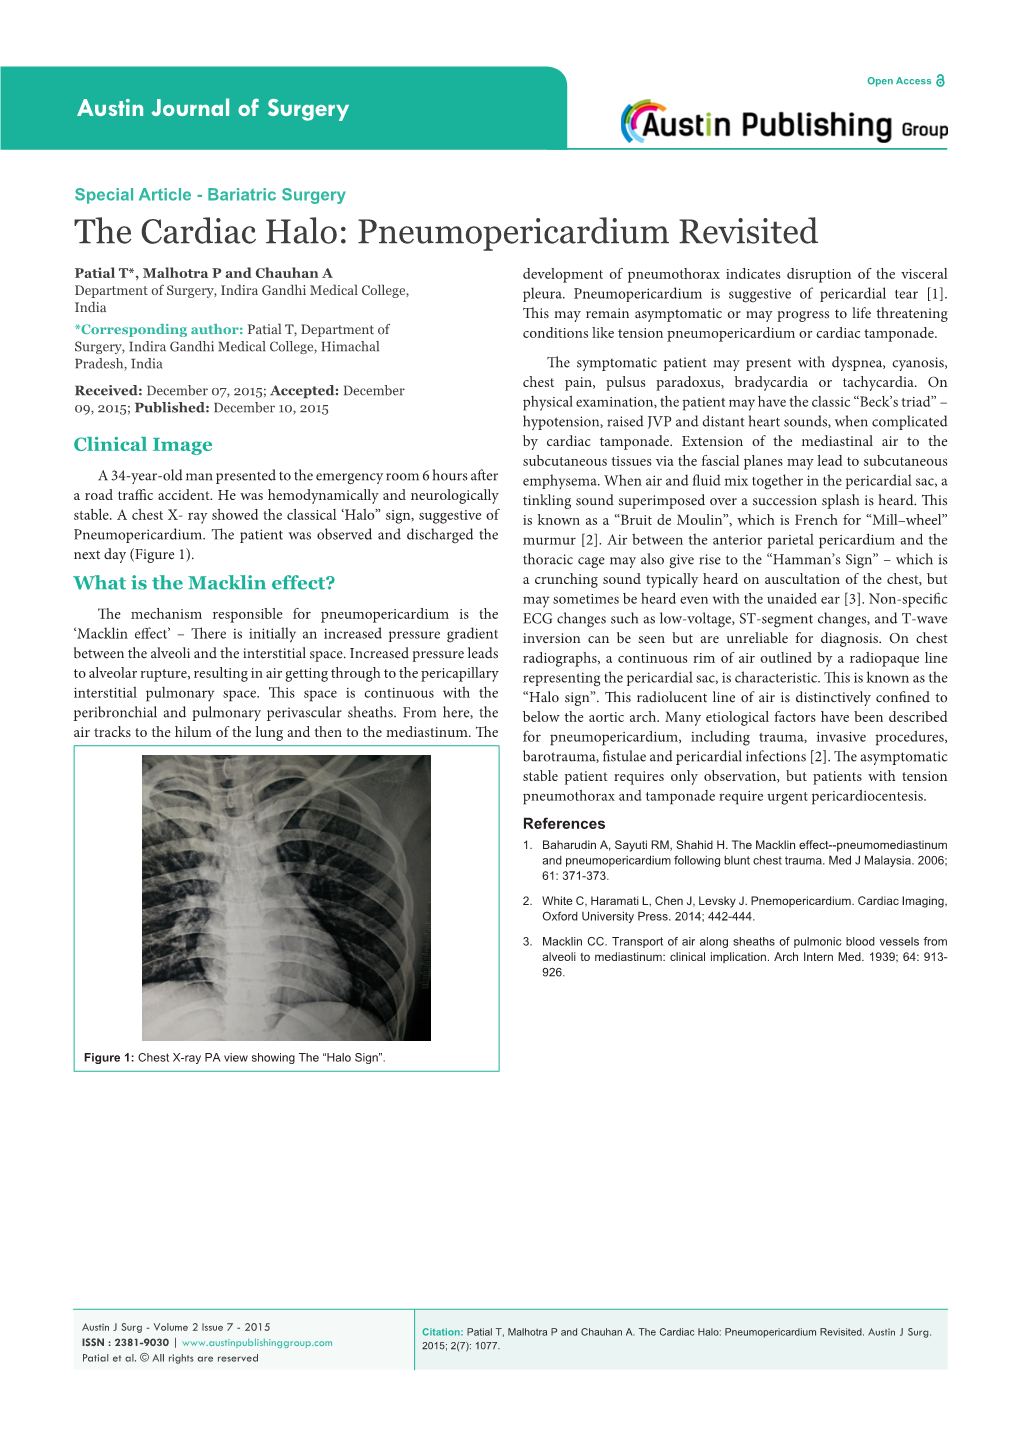 The Cardiac Halo: Pneumopericardium Revisited